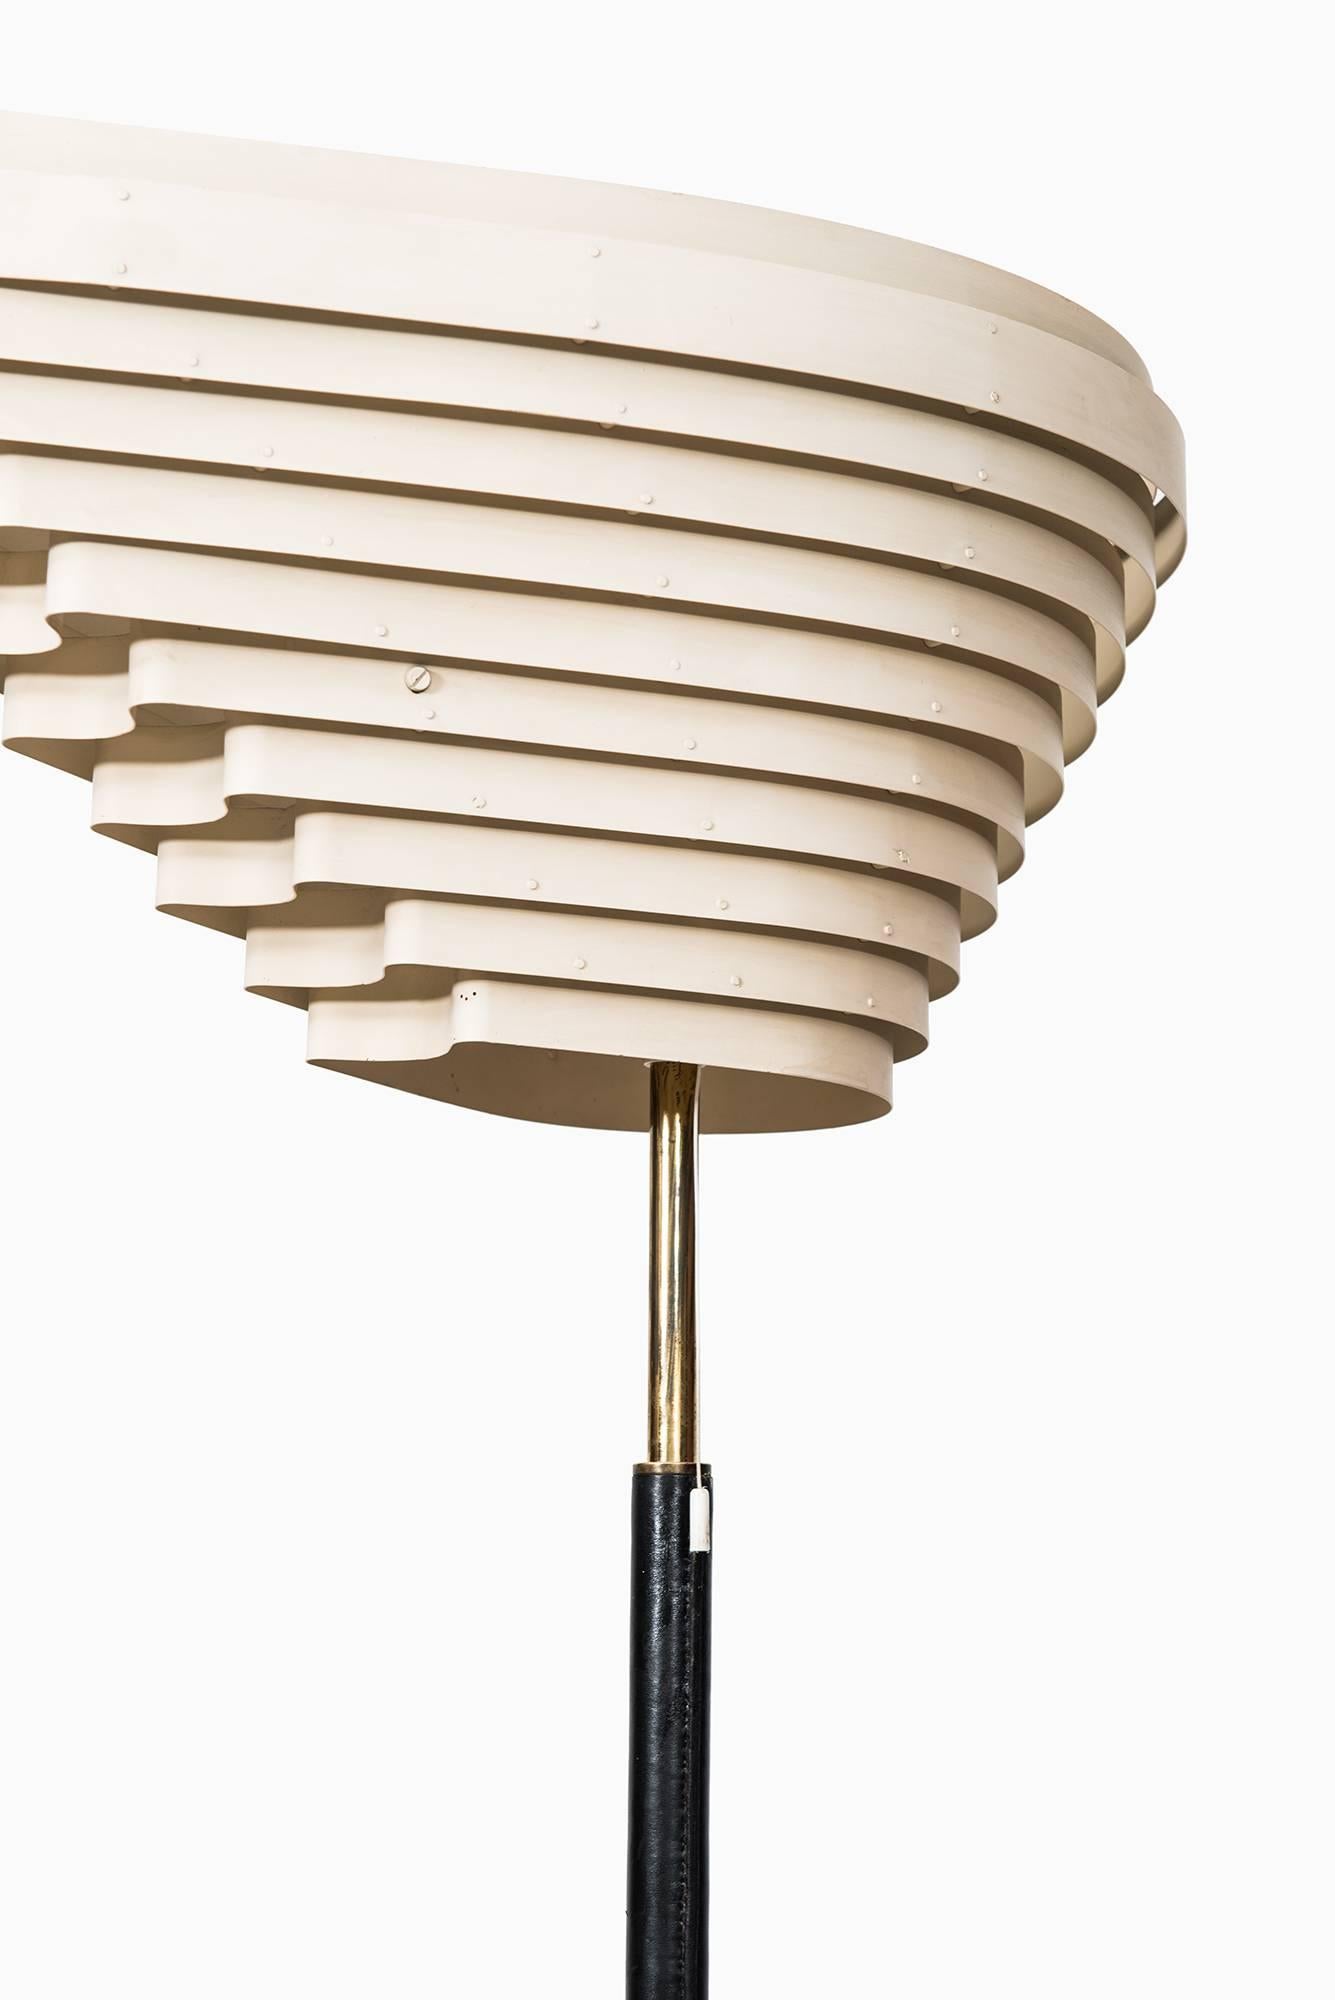 Mid-20th Century Alvar Aalto Angel Wing Floor Lamp Model A805 by Valaistustyö in Finland For Sale